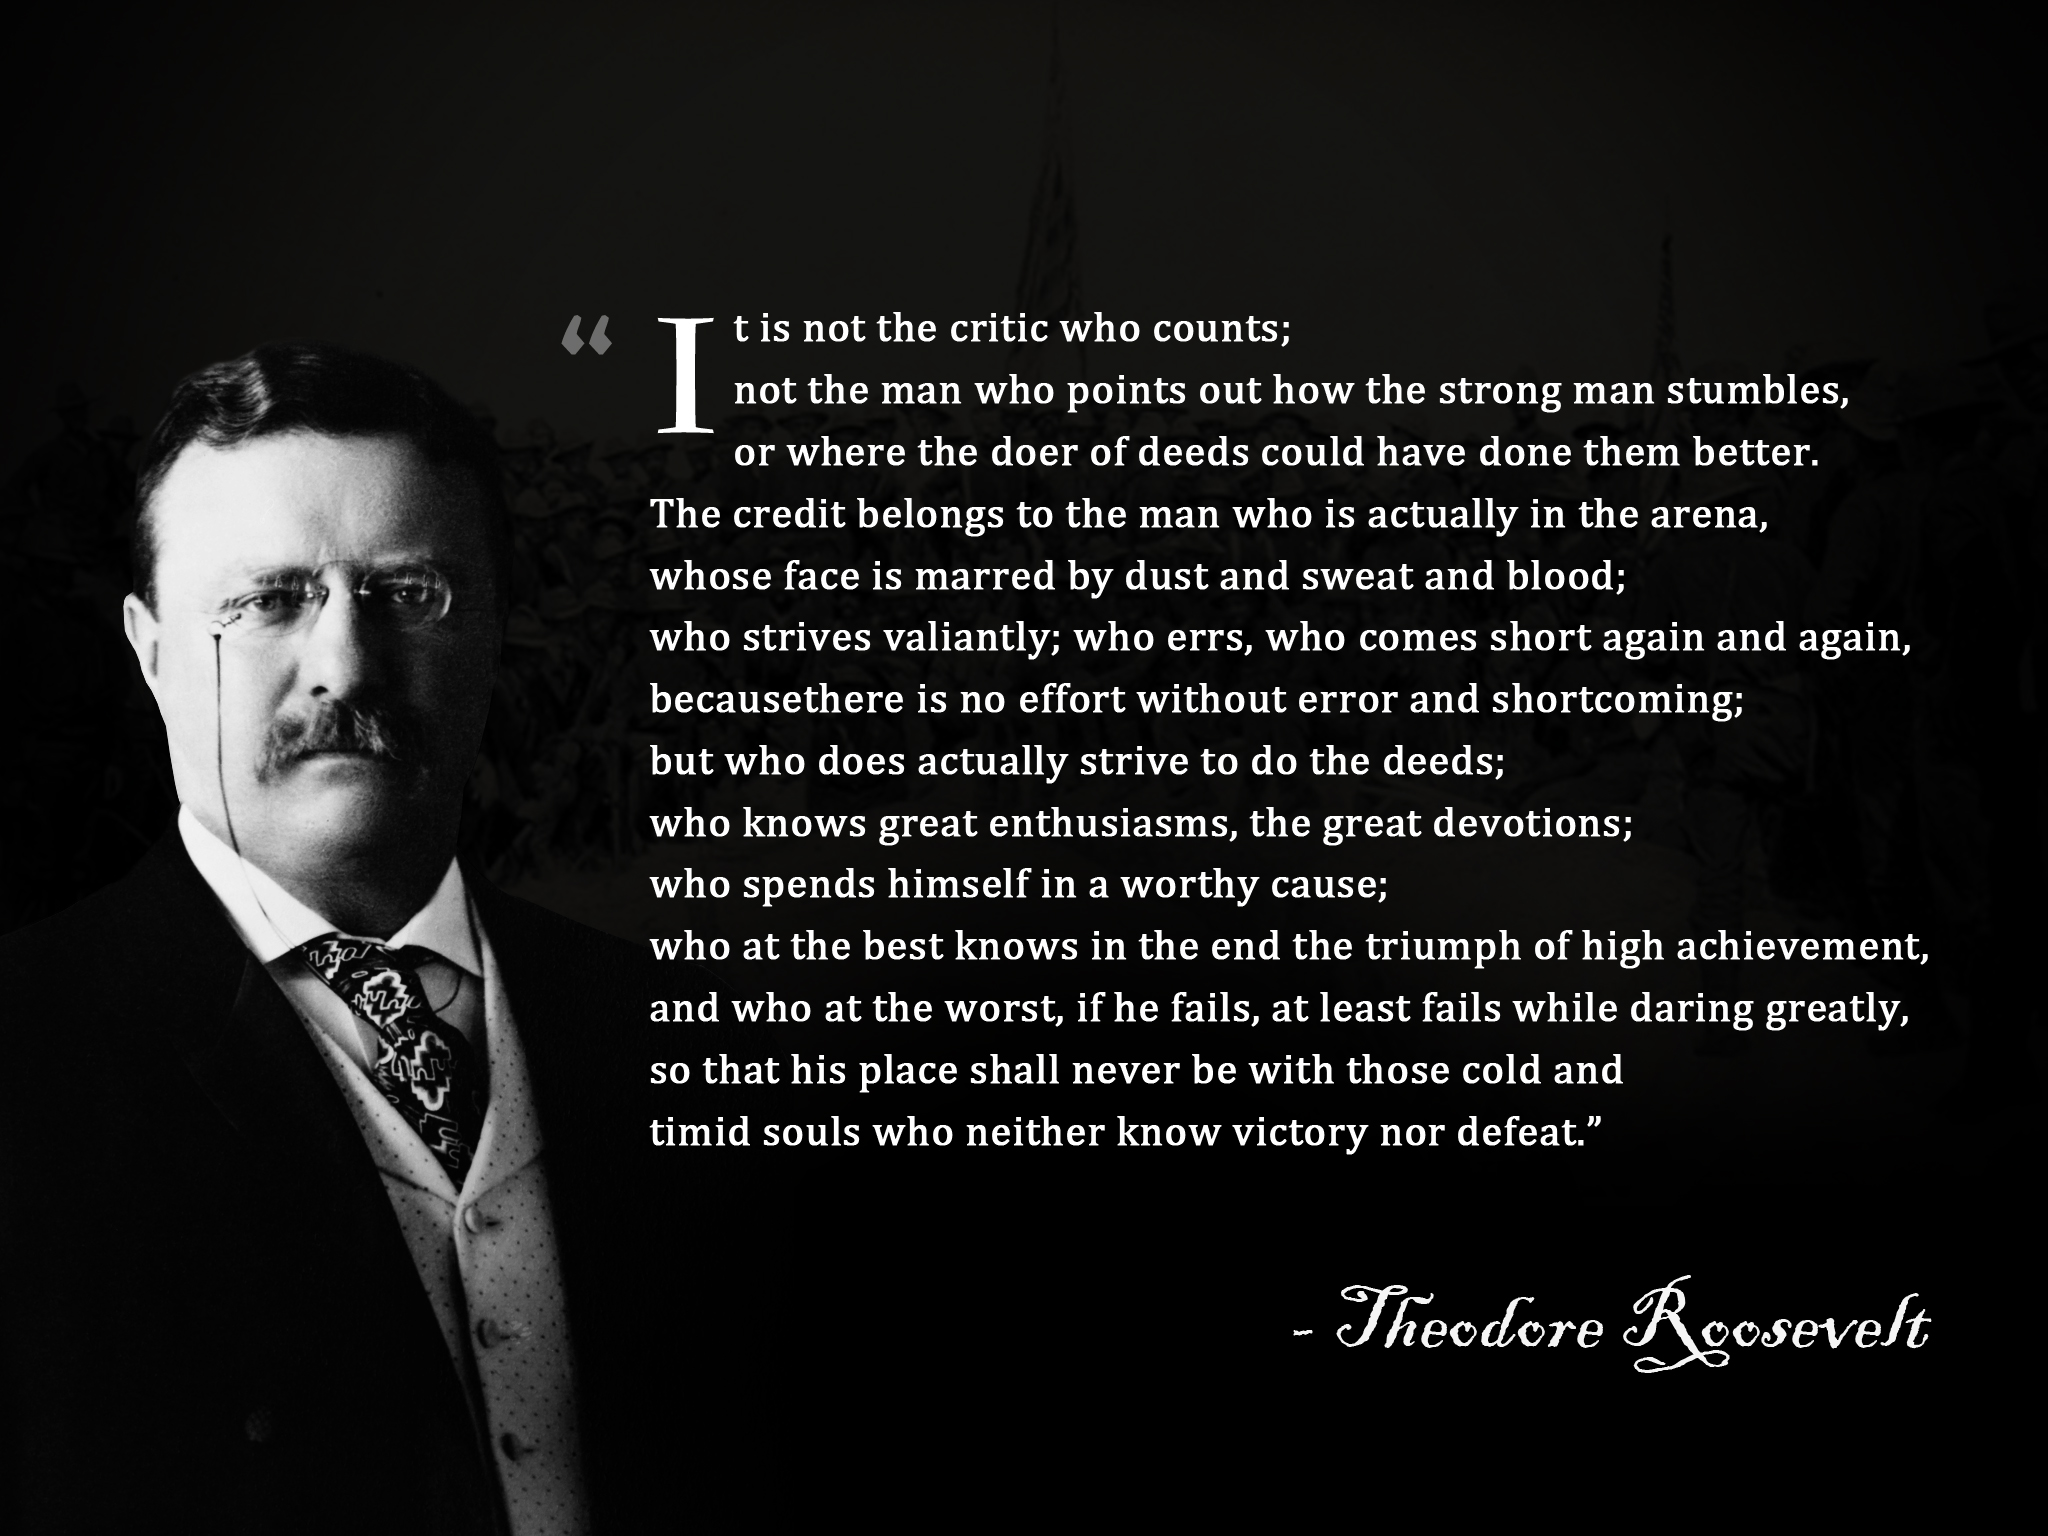 Theodore Roosevelt Quotes About Nature. QuotesGram